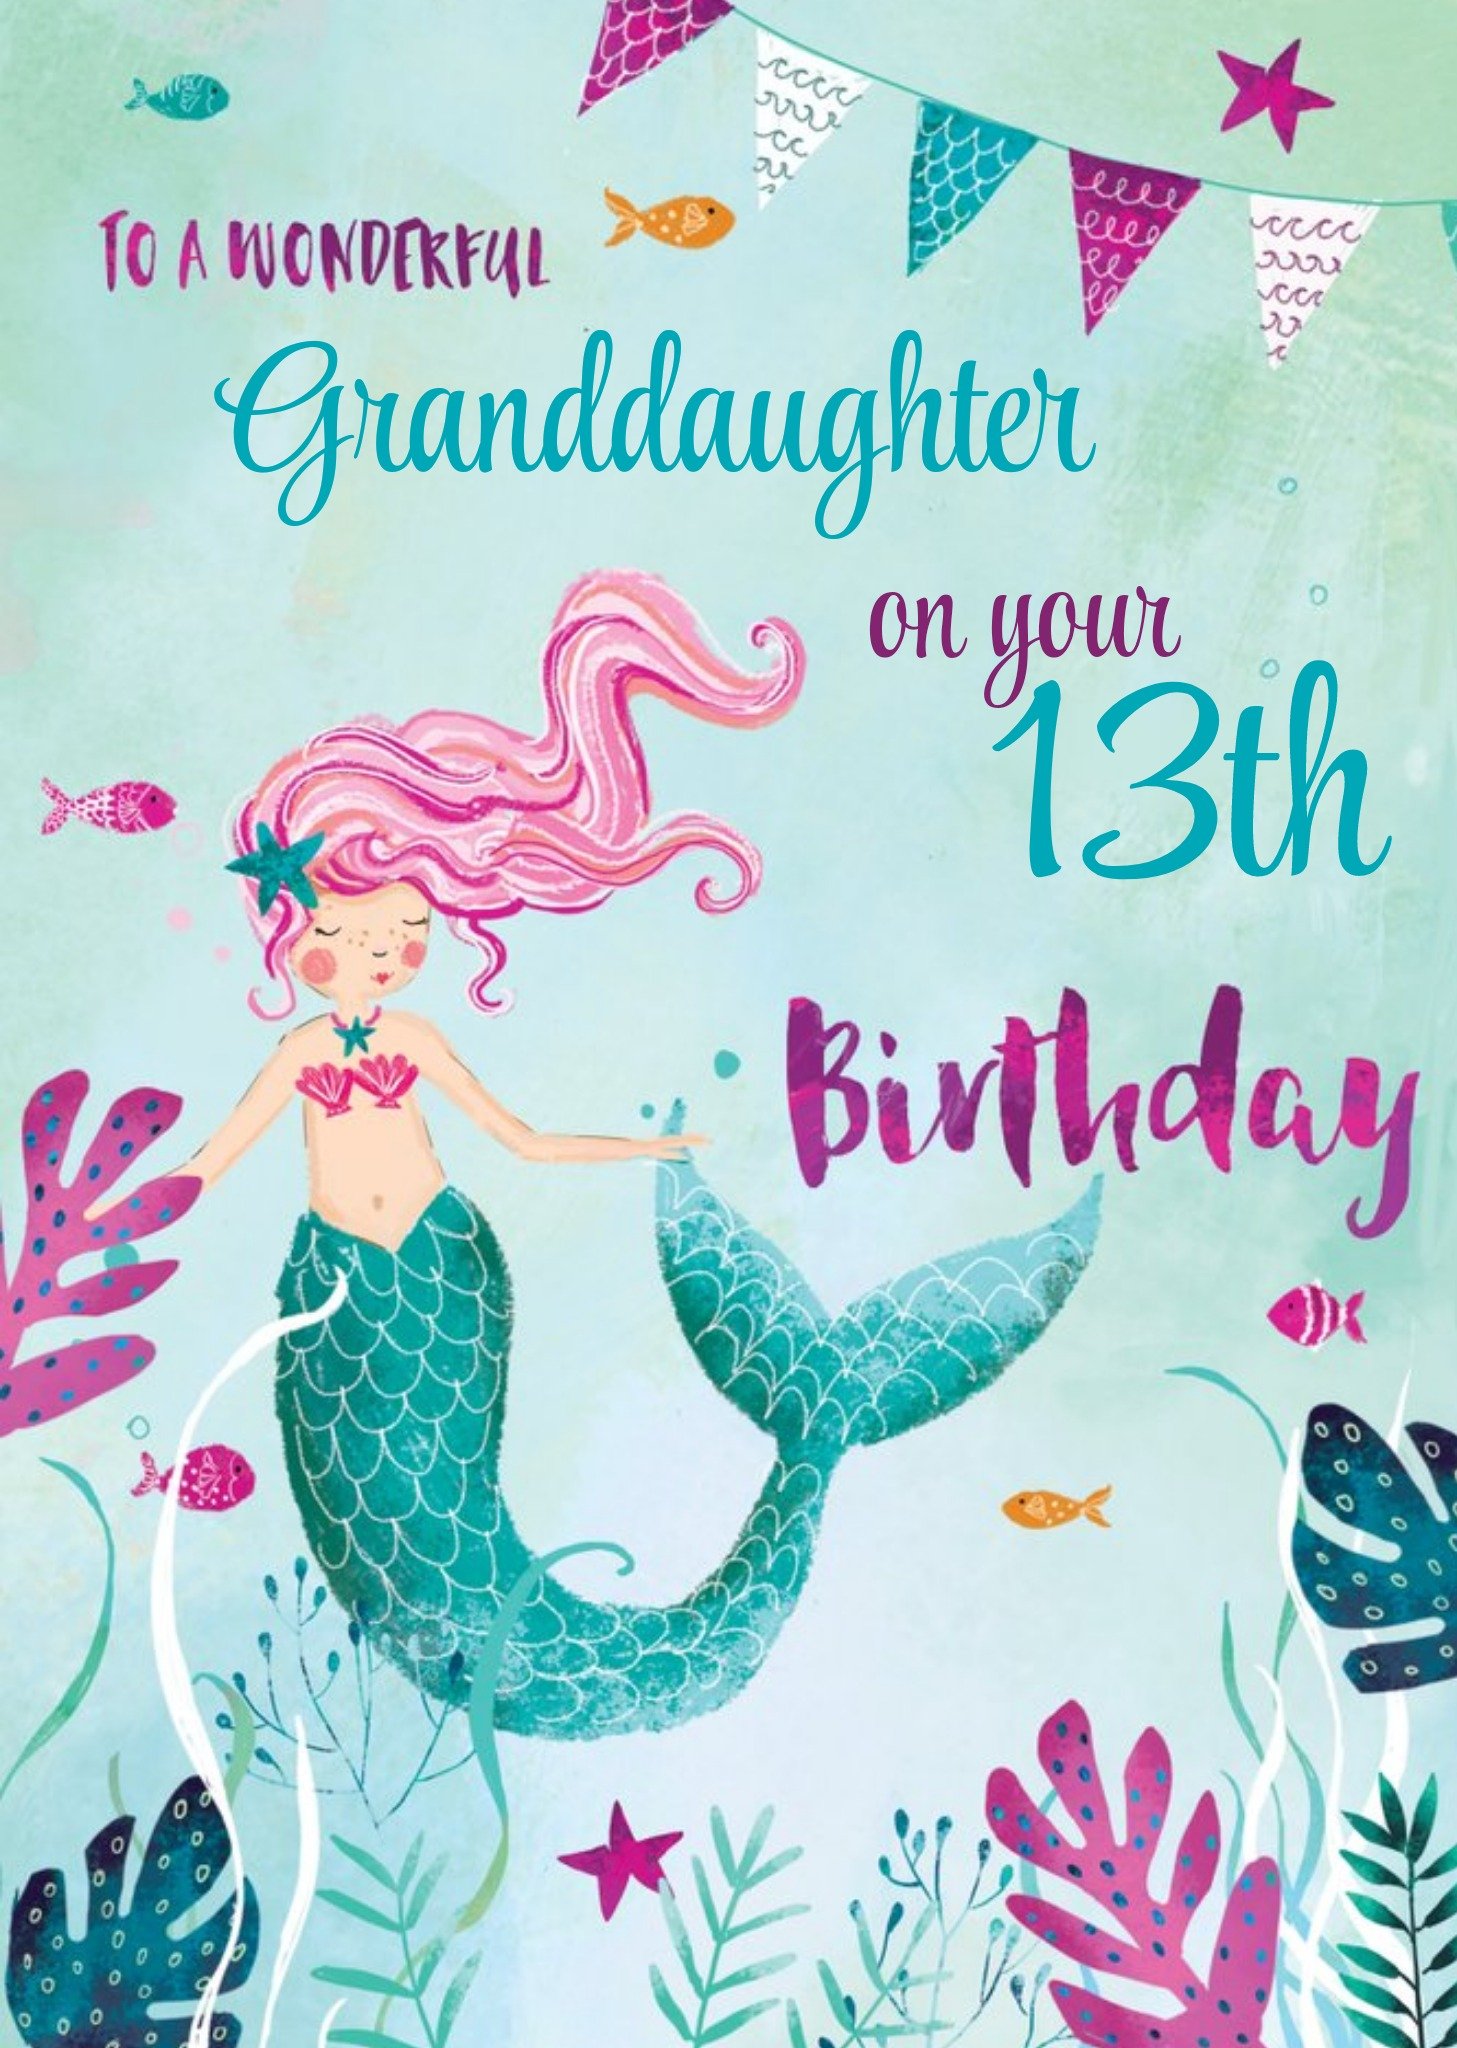 Ling Design Birthday Card - 13Th Birthday - Granddaughter - The Sea - Mermaid Ecard